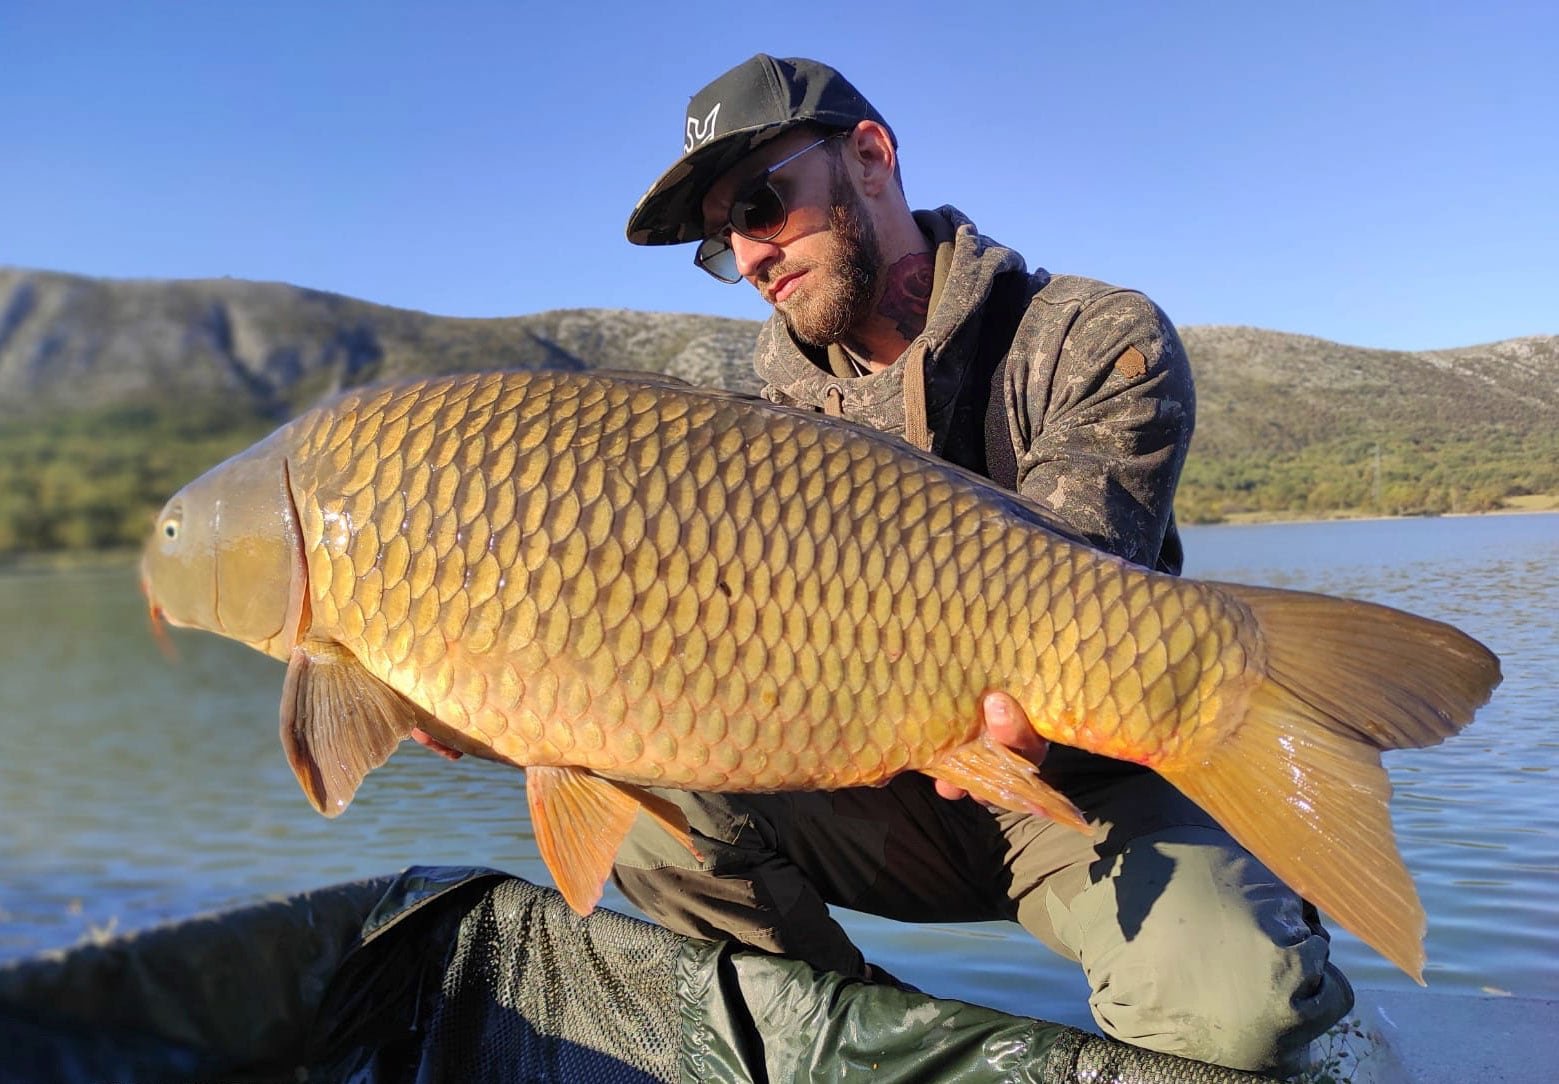 Angler holding carp caught on Tribalj lake in Croatia, Europe